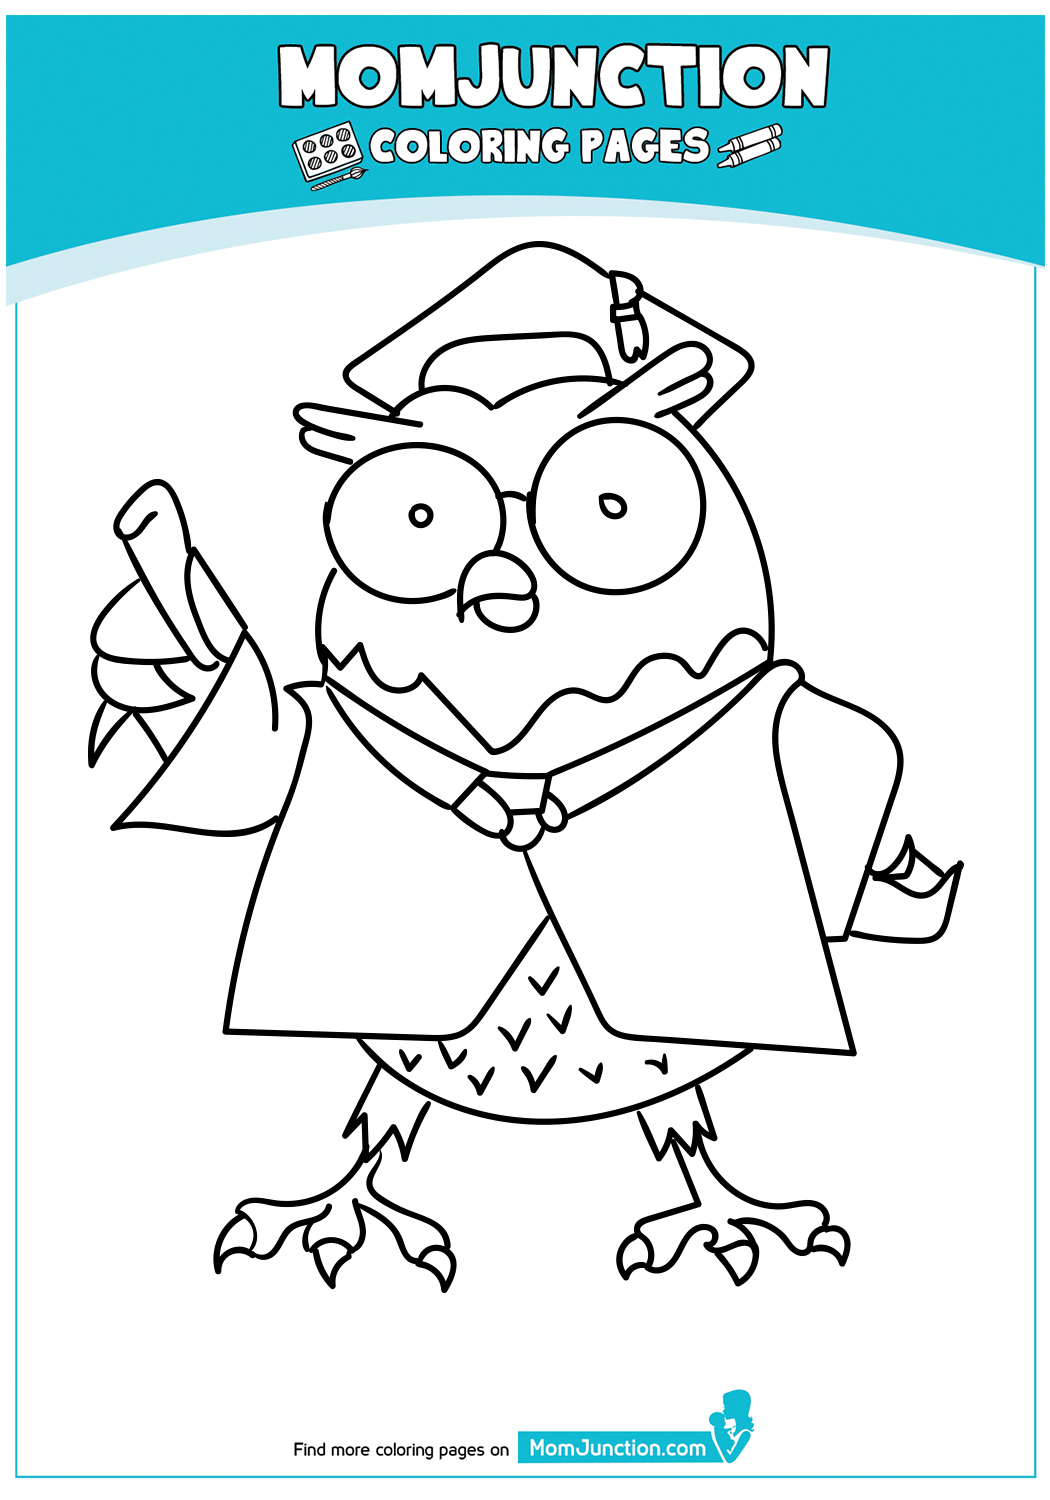 Professor-Owl